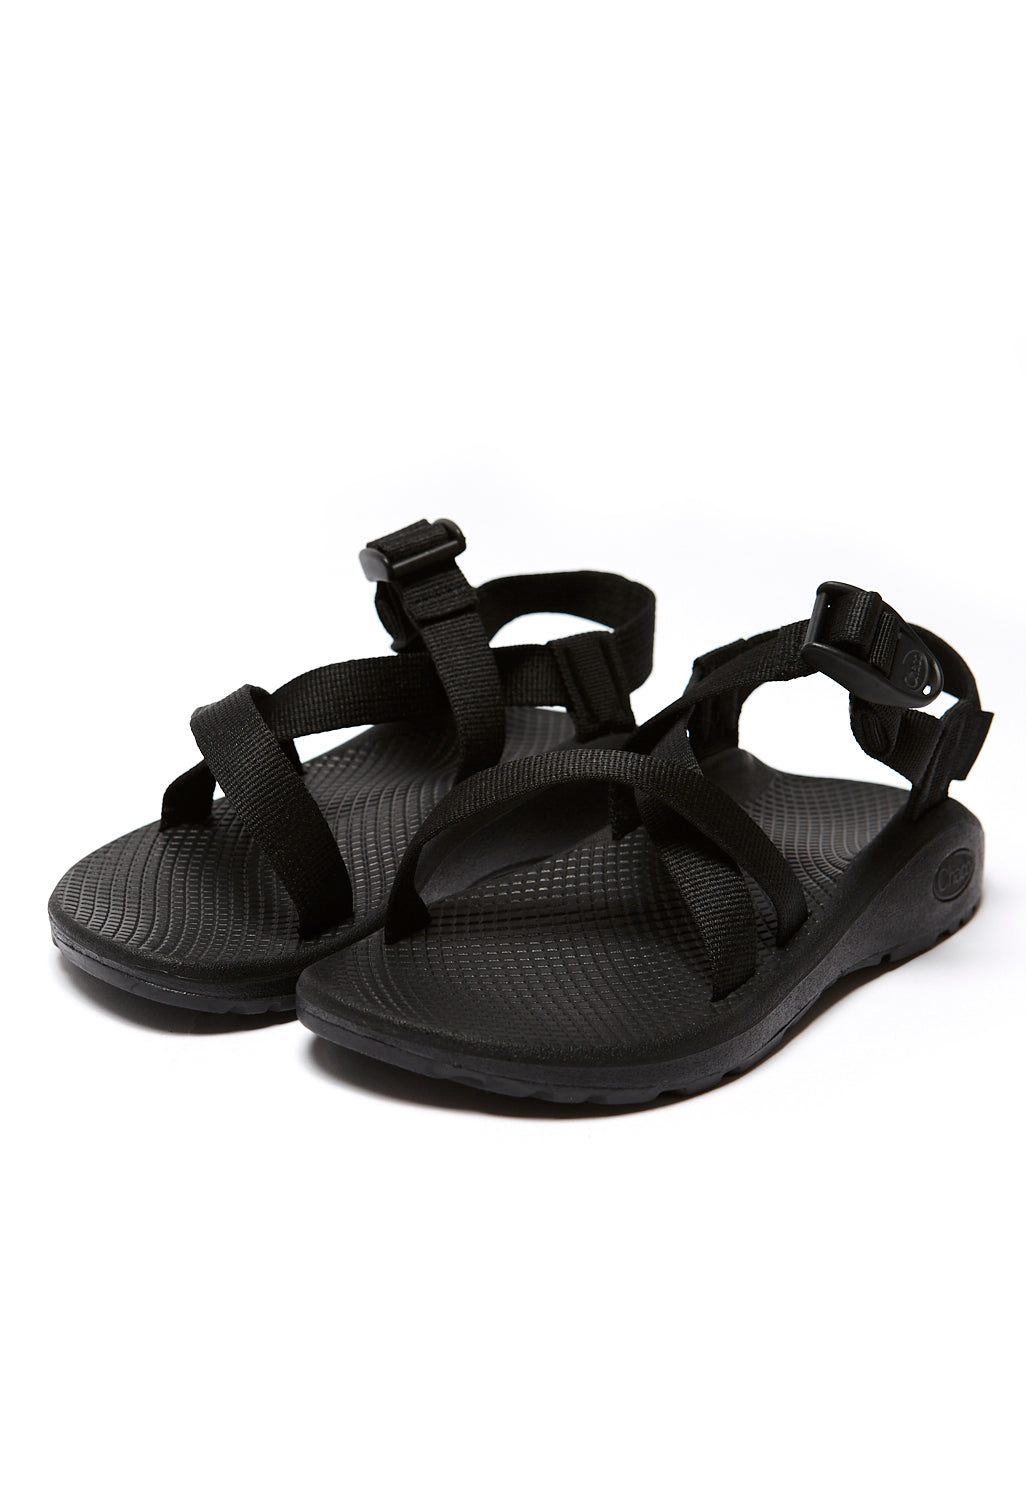 Chaco Women's Z1 Classic Sandals - Black